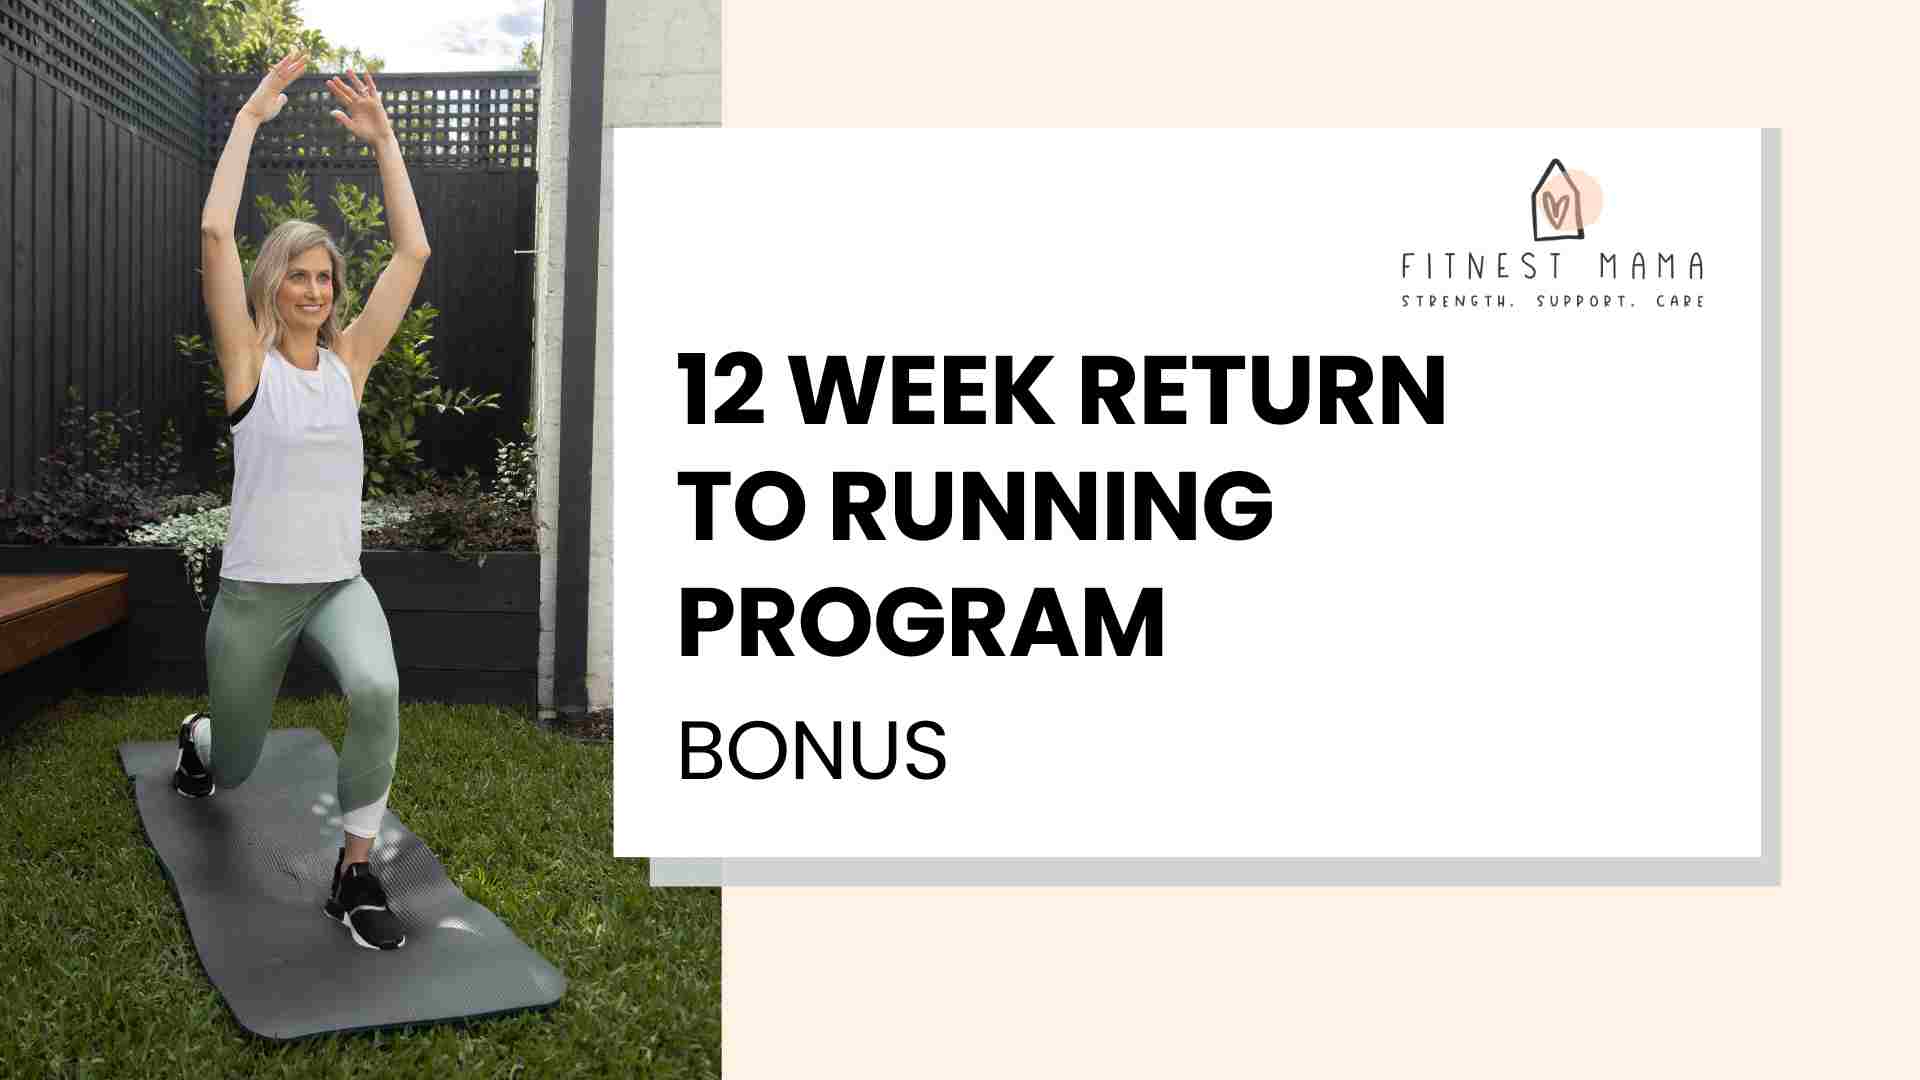 Image showing the FitNest 12 week return to running program